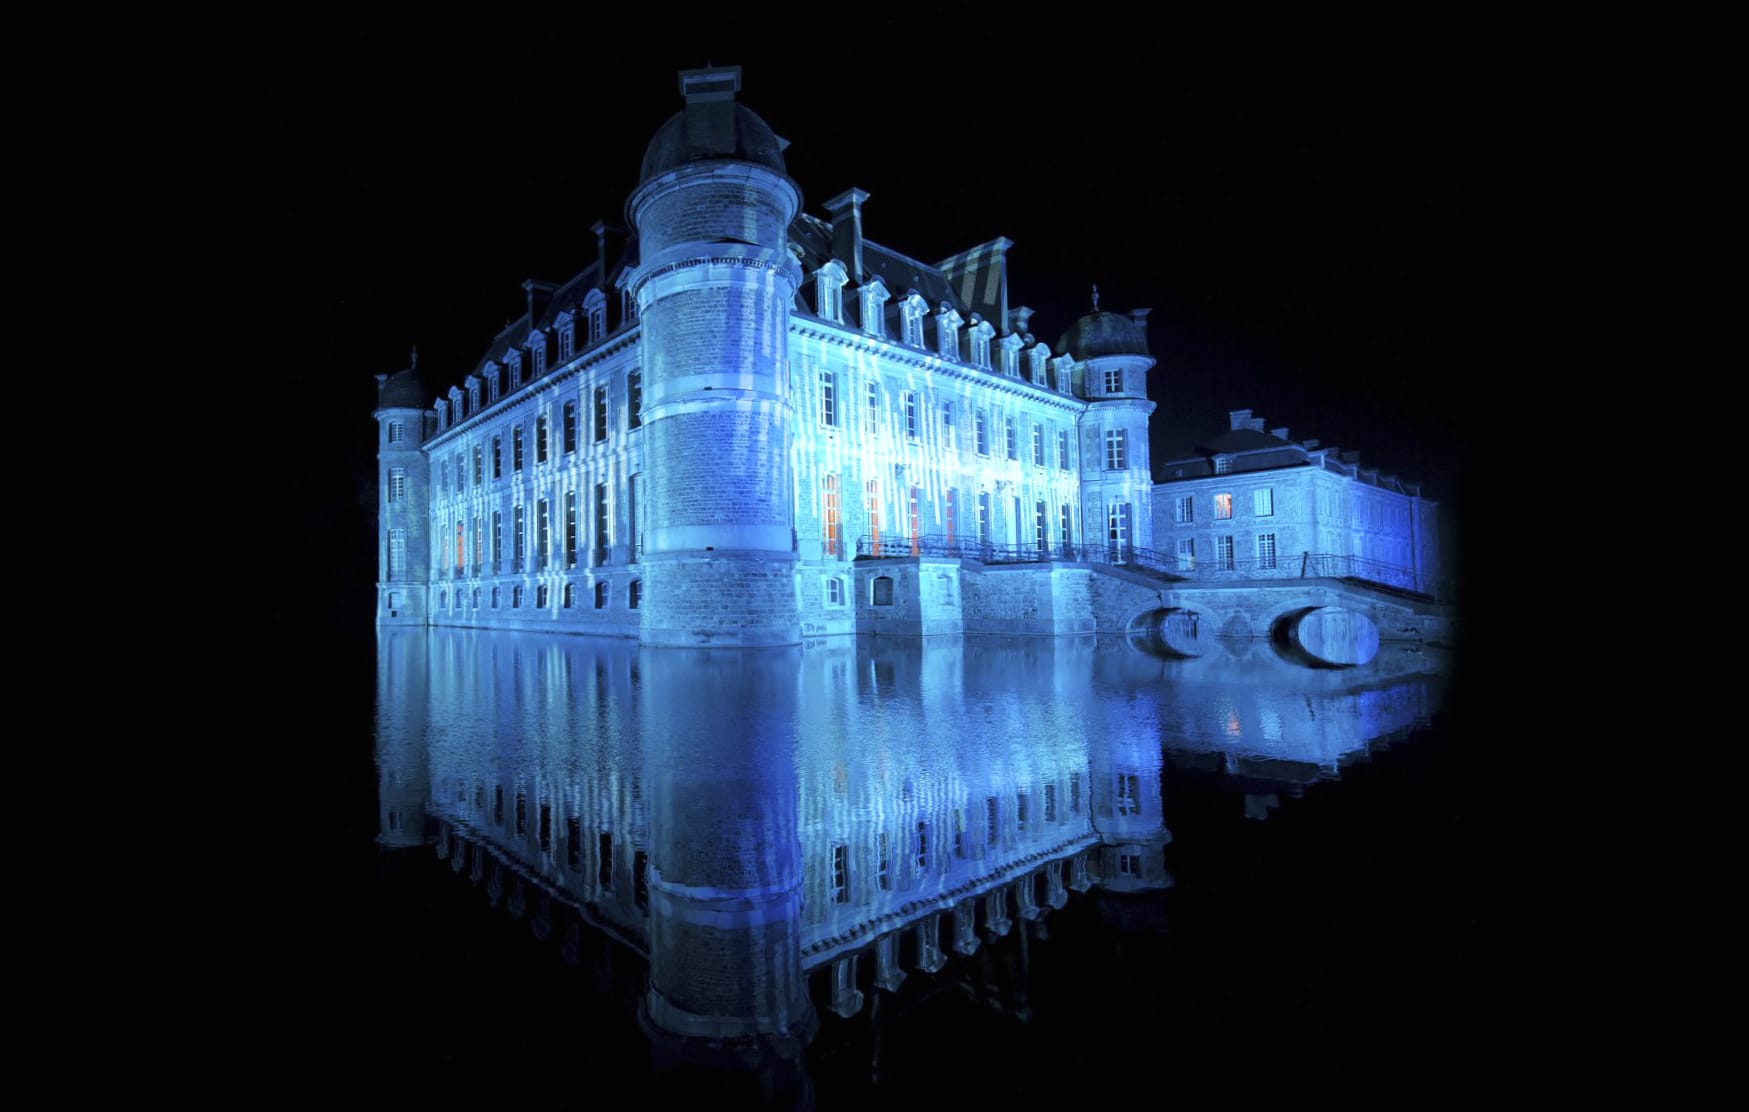 Chateau De Beloeil at 1024 x 1024 iPad size wallpapers HD quality